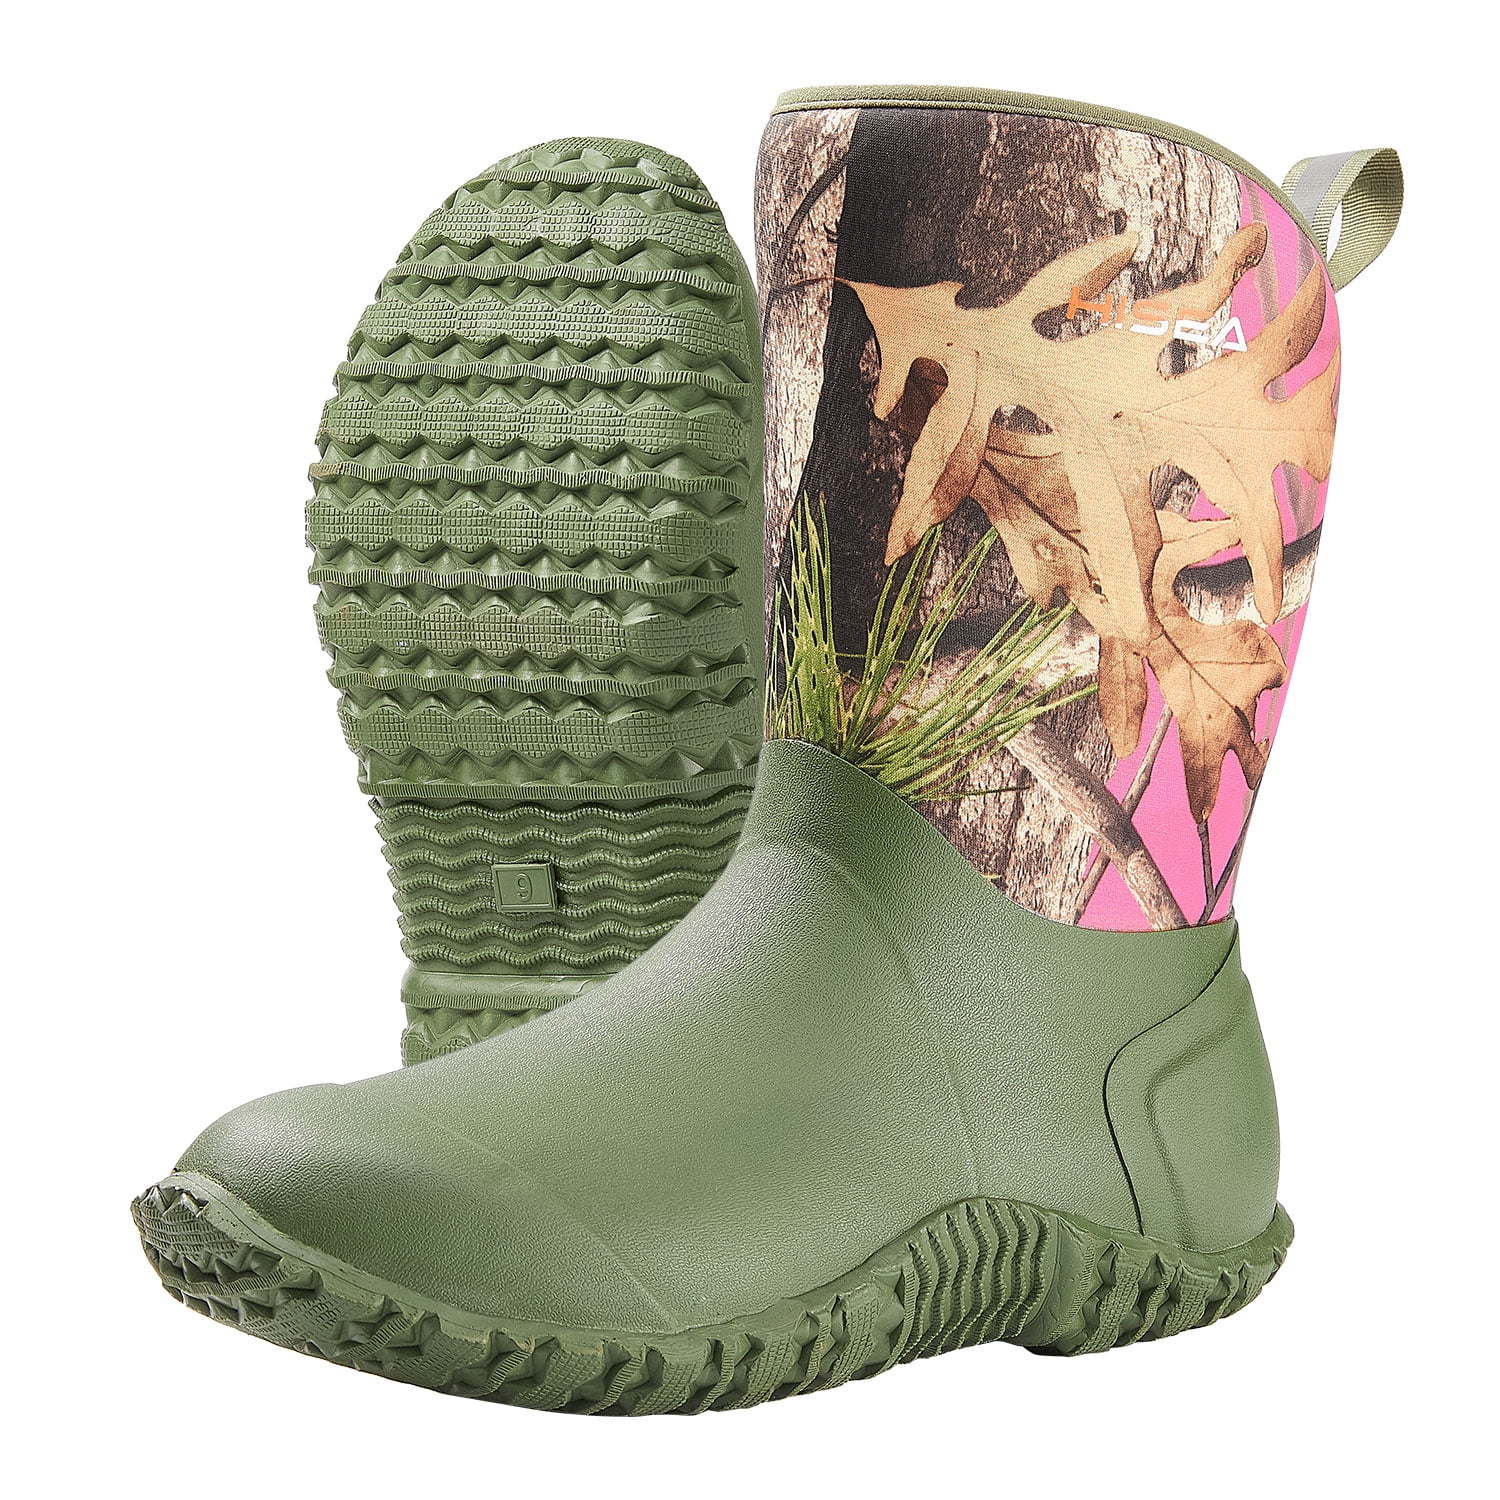 HISEA Women/'s Rubber Garden Boots Waterproof Insulated Yard Gardening Shoes Mid Height for Muck Mud Working Outdoor